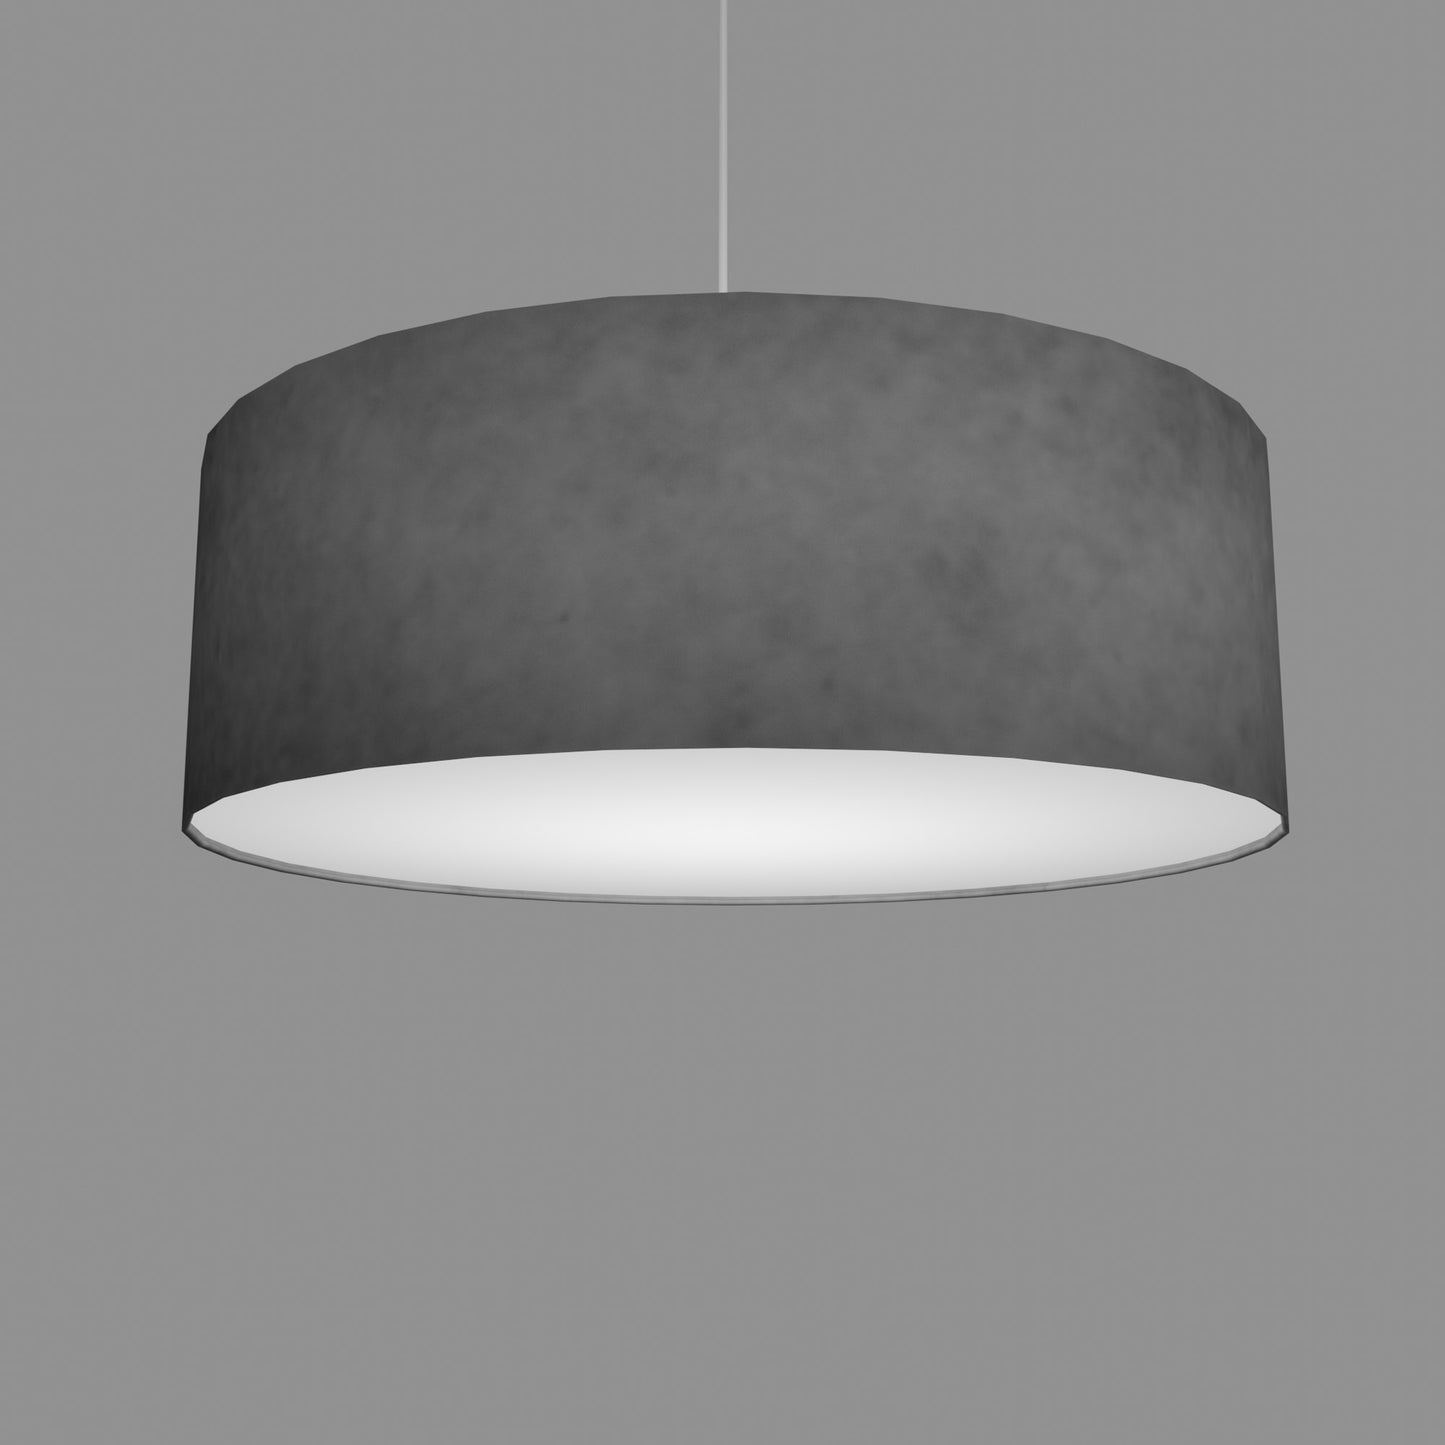 Drum Lamp Shade - P53 - Pewter Grey, 60cm(d) x 20cm(h)